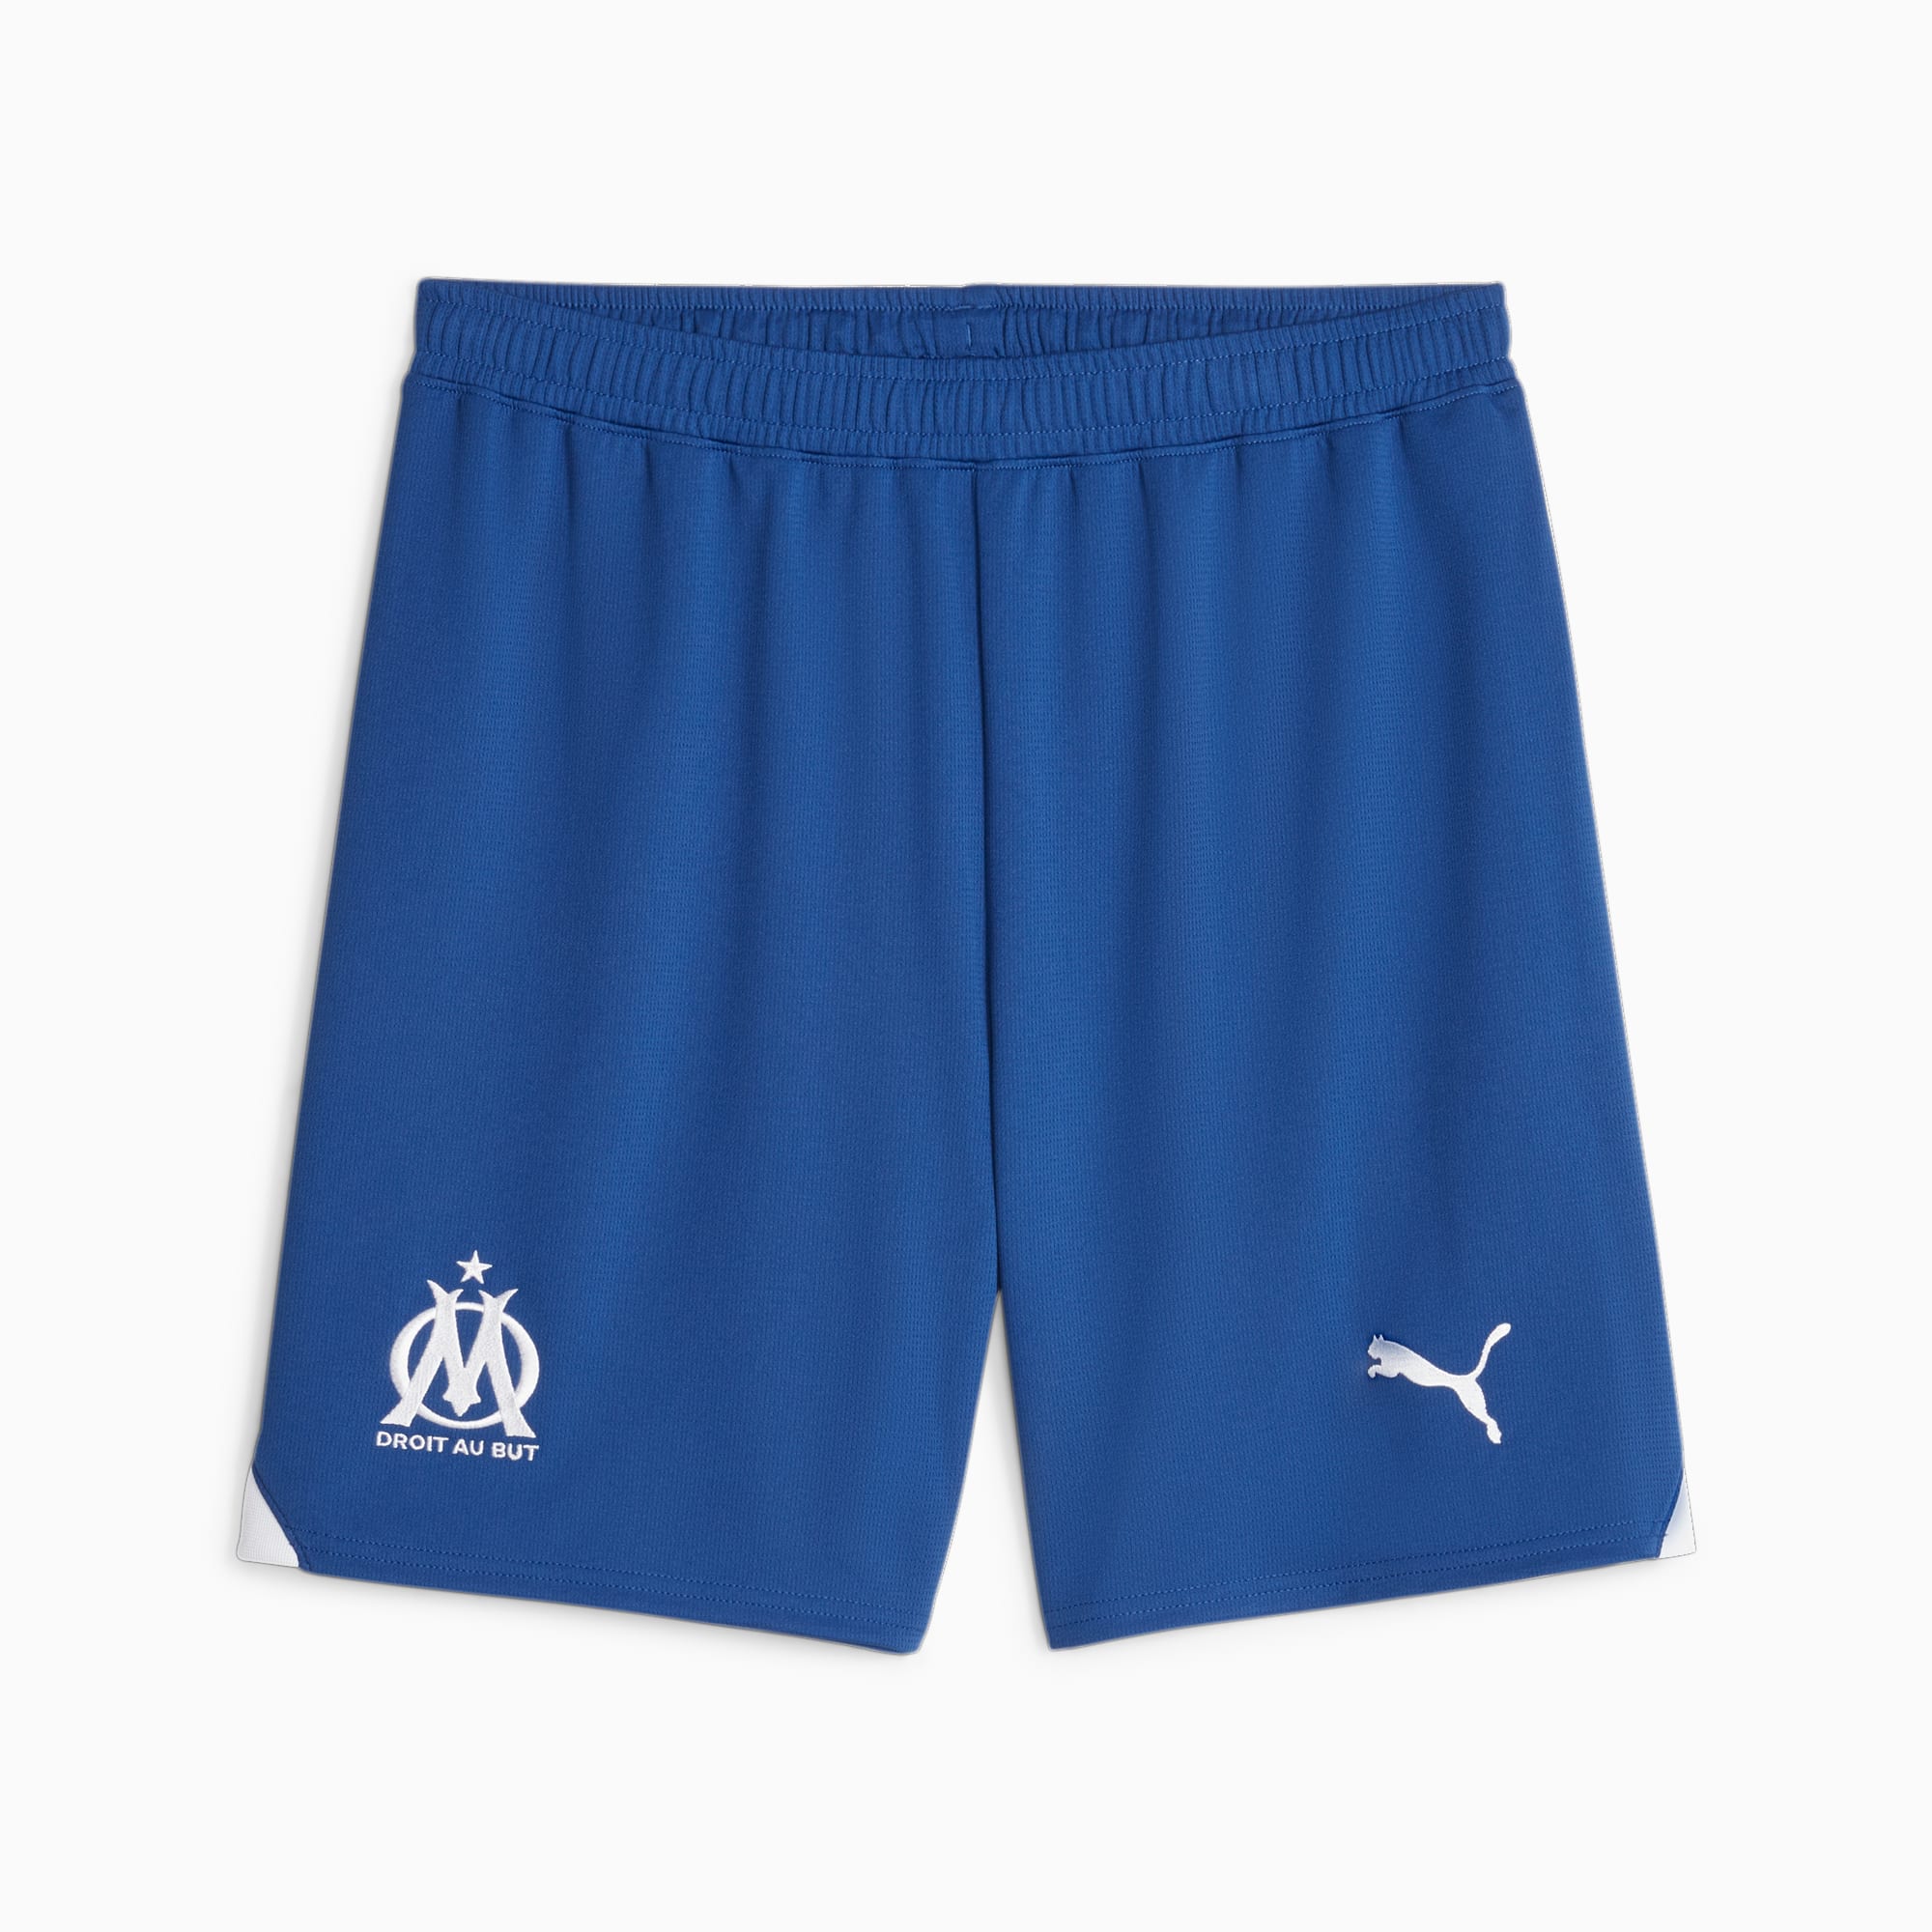 Men's PUMA Olympique De Marseille Football Shorts, Royal Blue